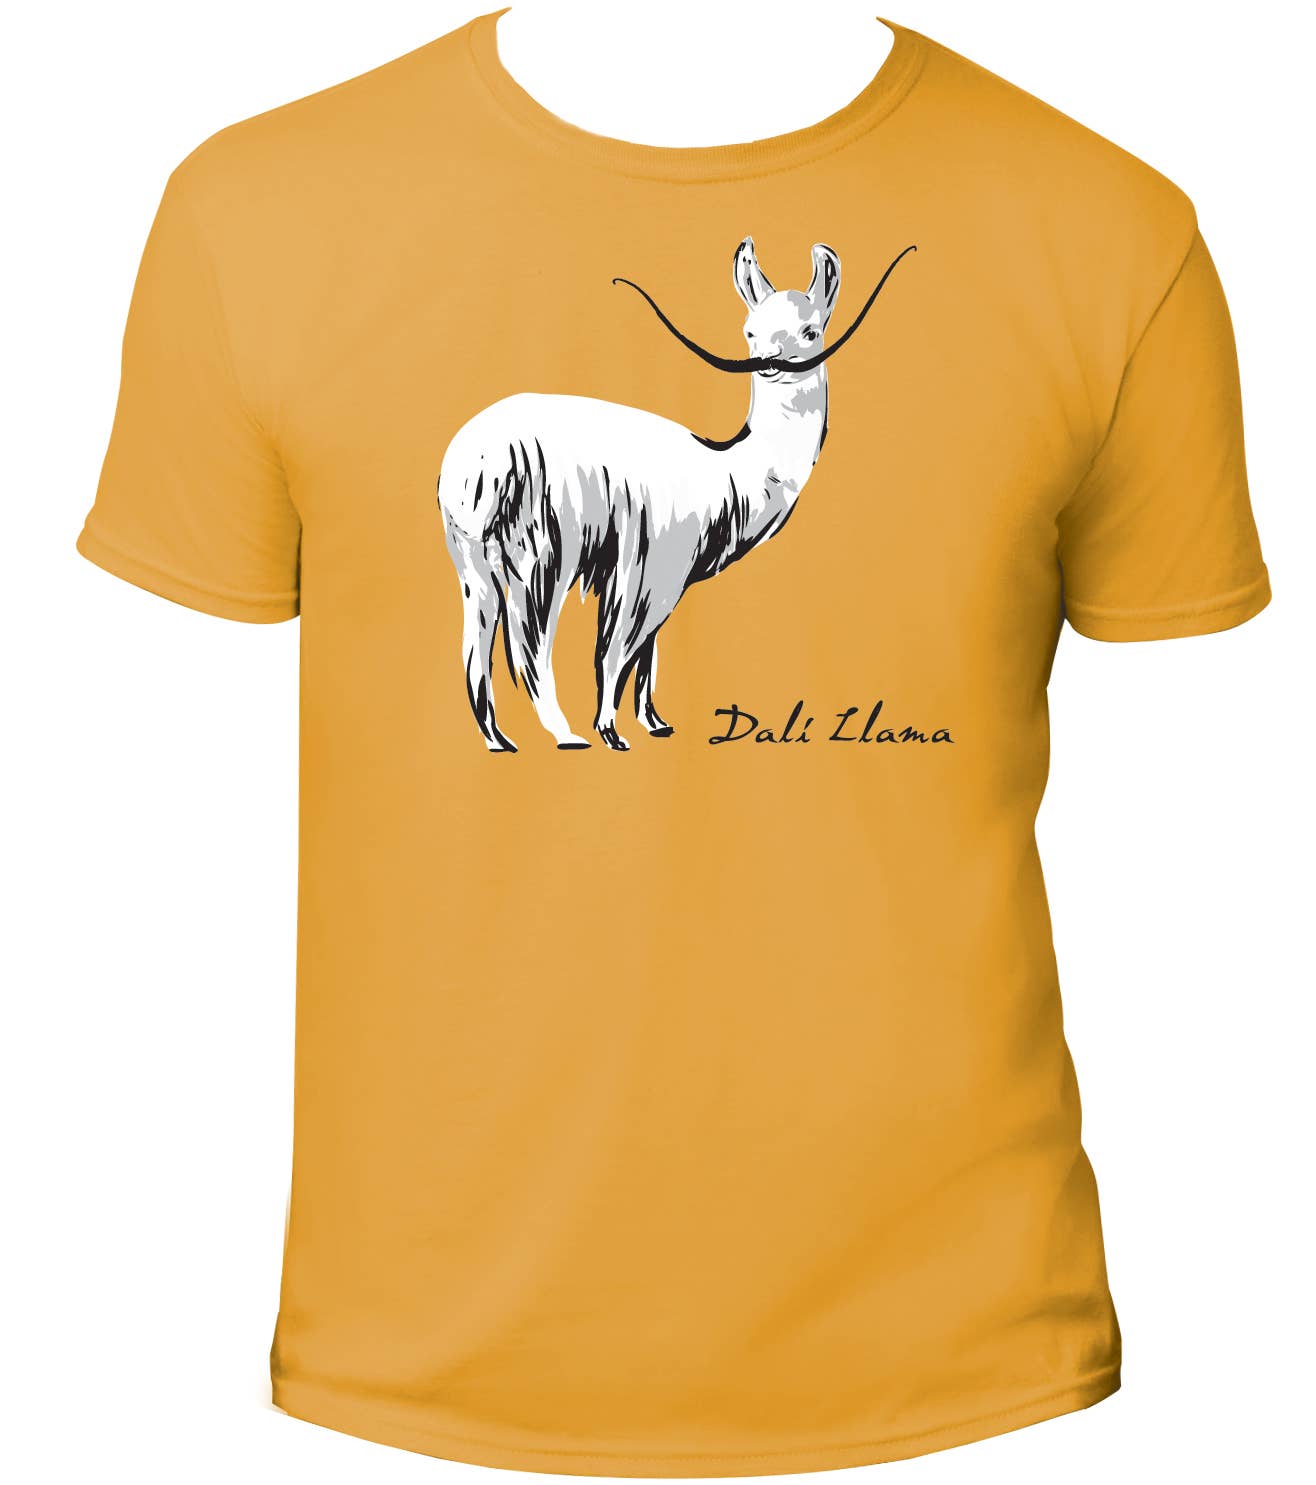 Dalí Llama Shirt from Unemployed Philosophers Guild